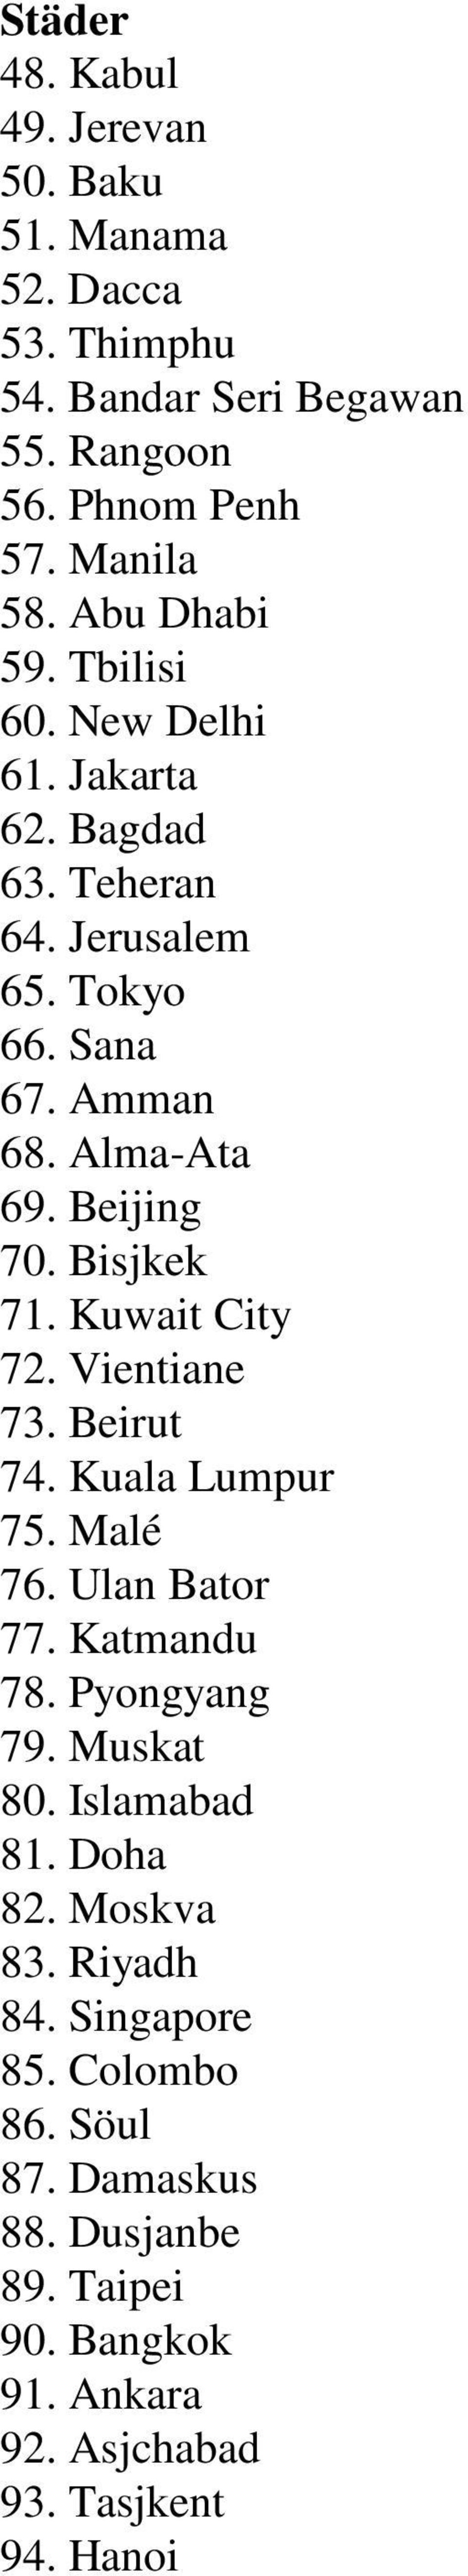 Bisjkek 71. Kuwait City 72. Vientiane 73. Beirut 74. Kuala Lumpur 75. Malé 76. Ulan Bator 77. Katmandu 78. Pyongyang 79. Muskat 80. Islamabad 81.